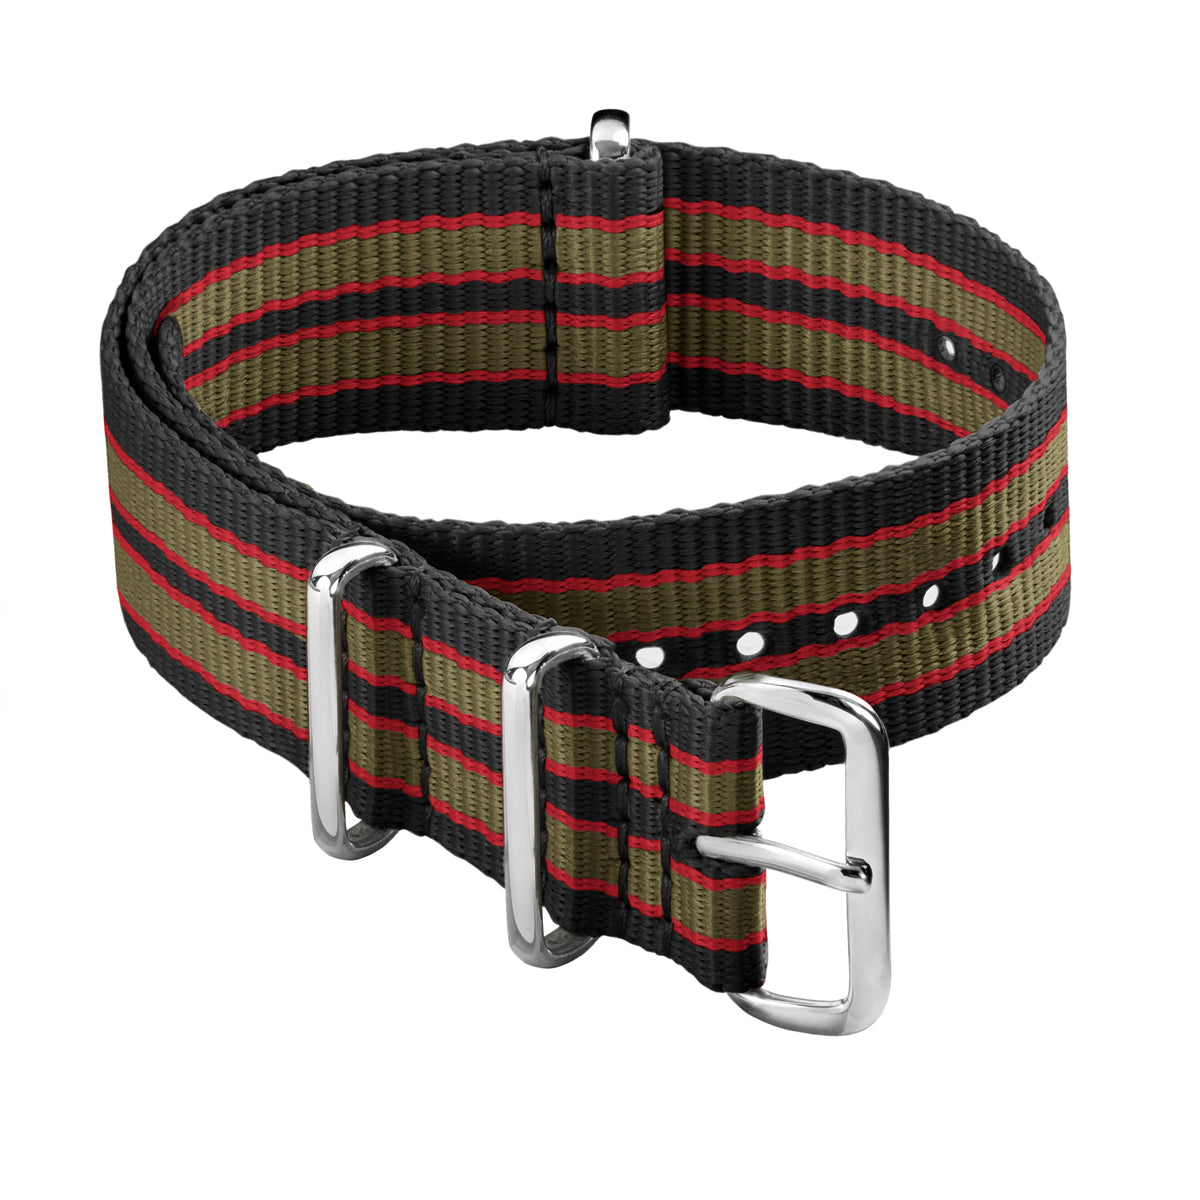  Archer Watch Straps - Premium Nylon Replacement Bands